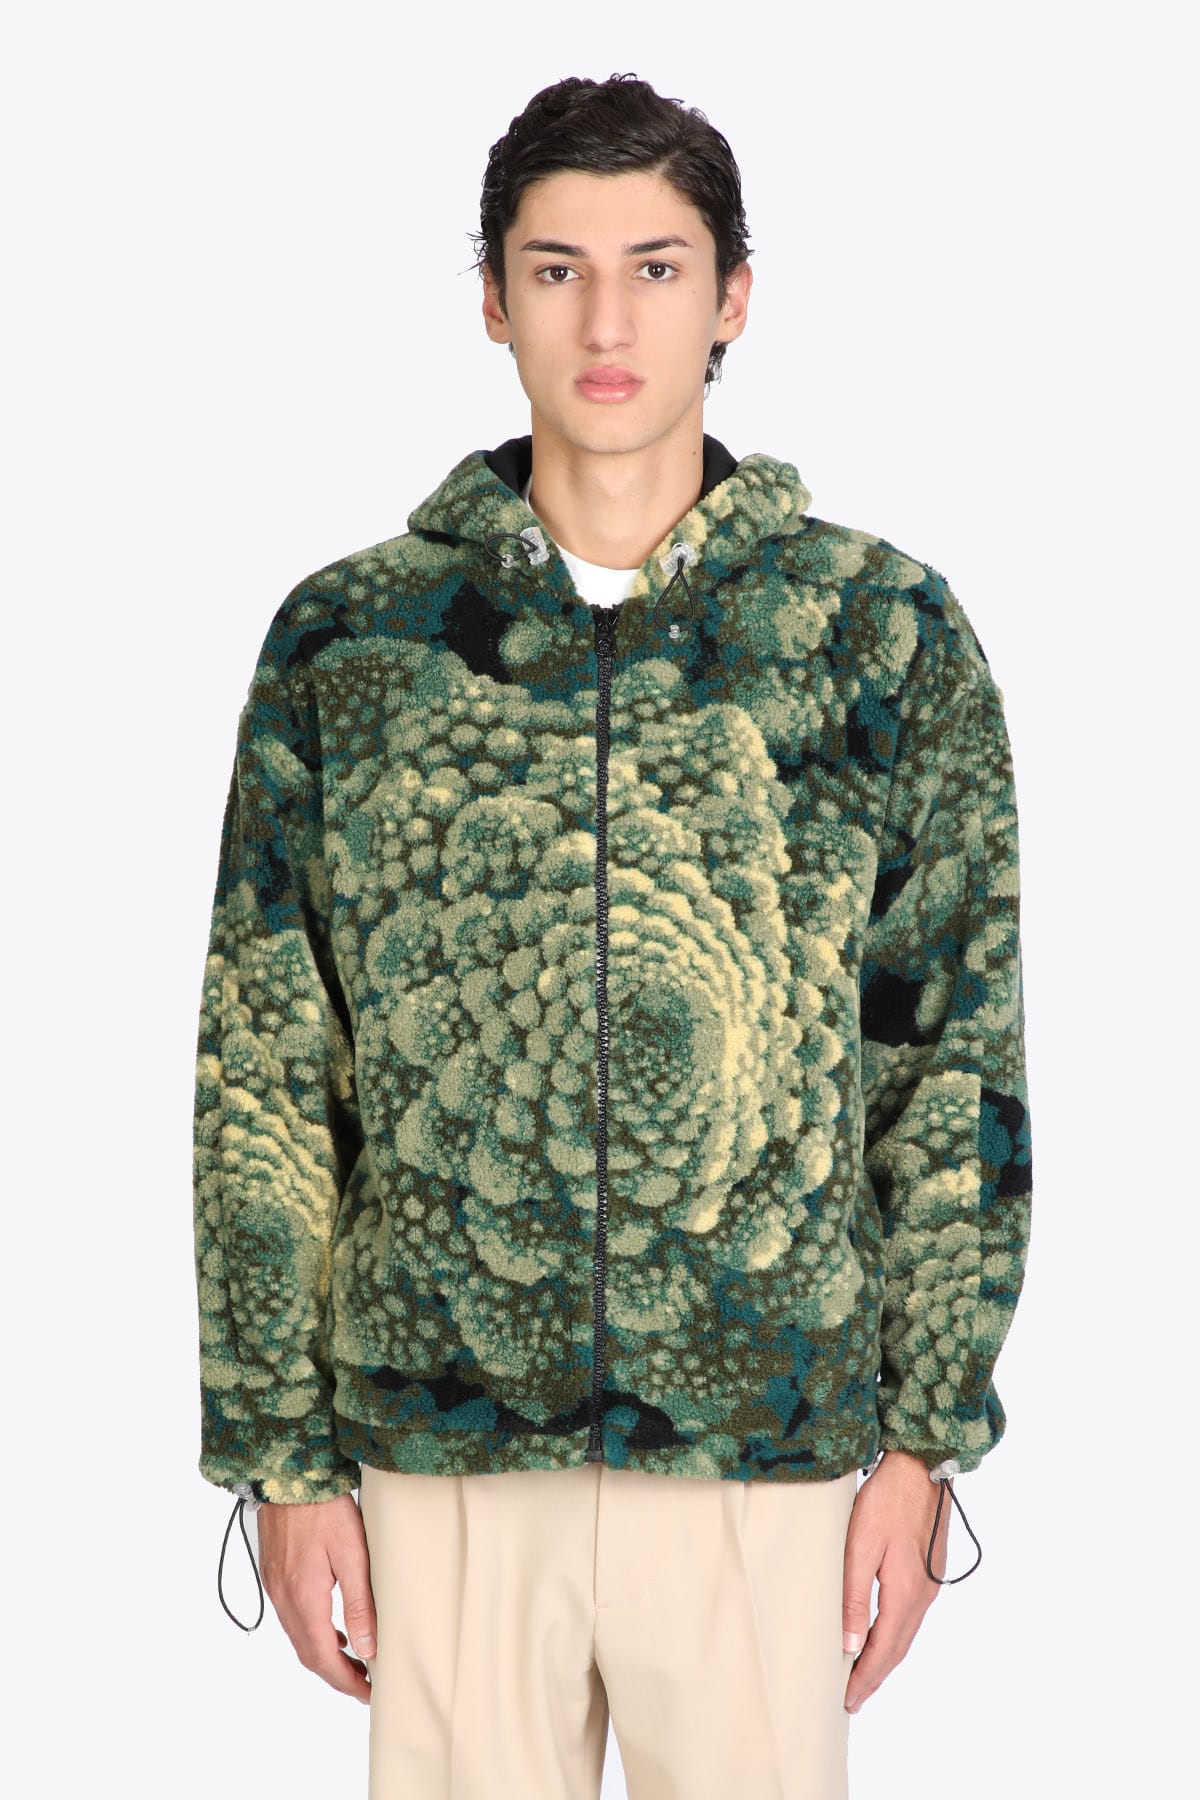 Bonsai Full Zip Hoodie Sweatshirt Broccoli all-over printed fleece hooded jacket.